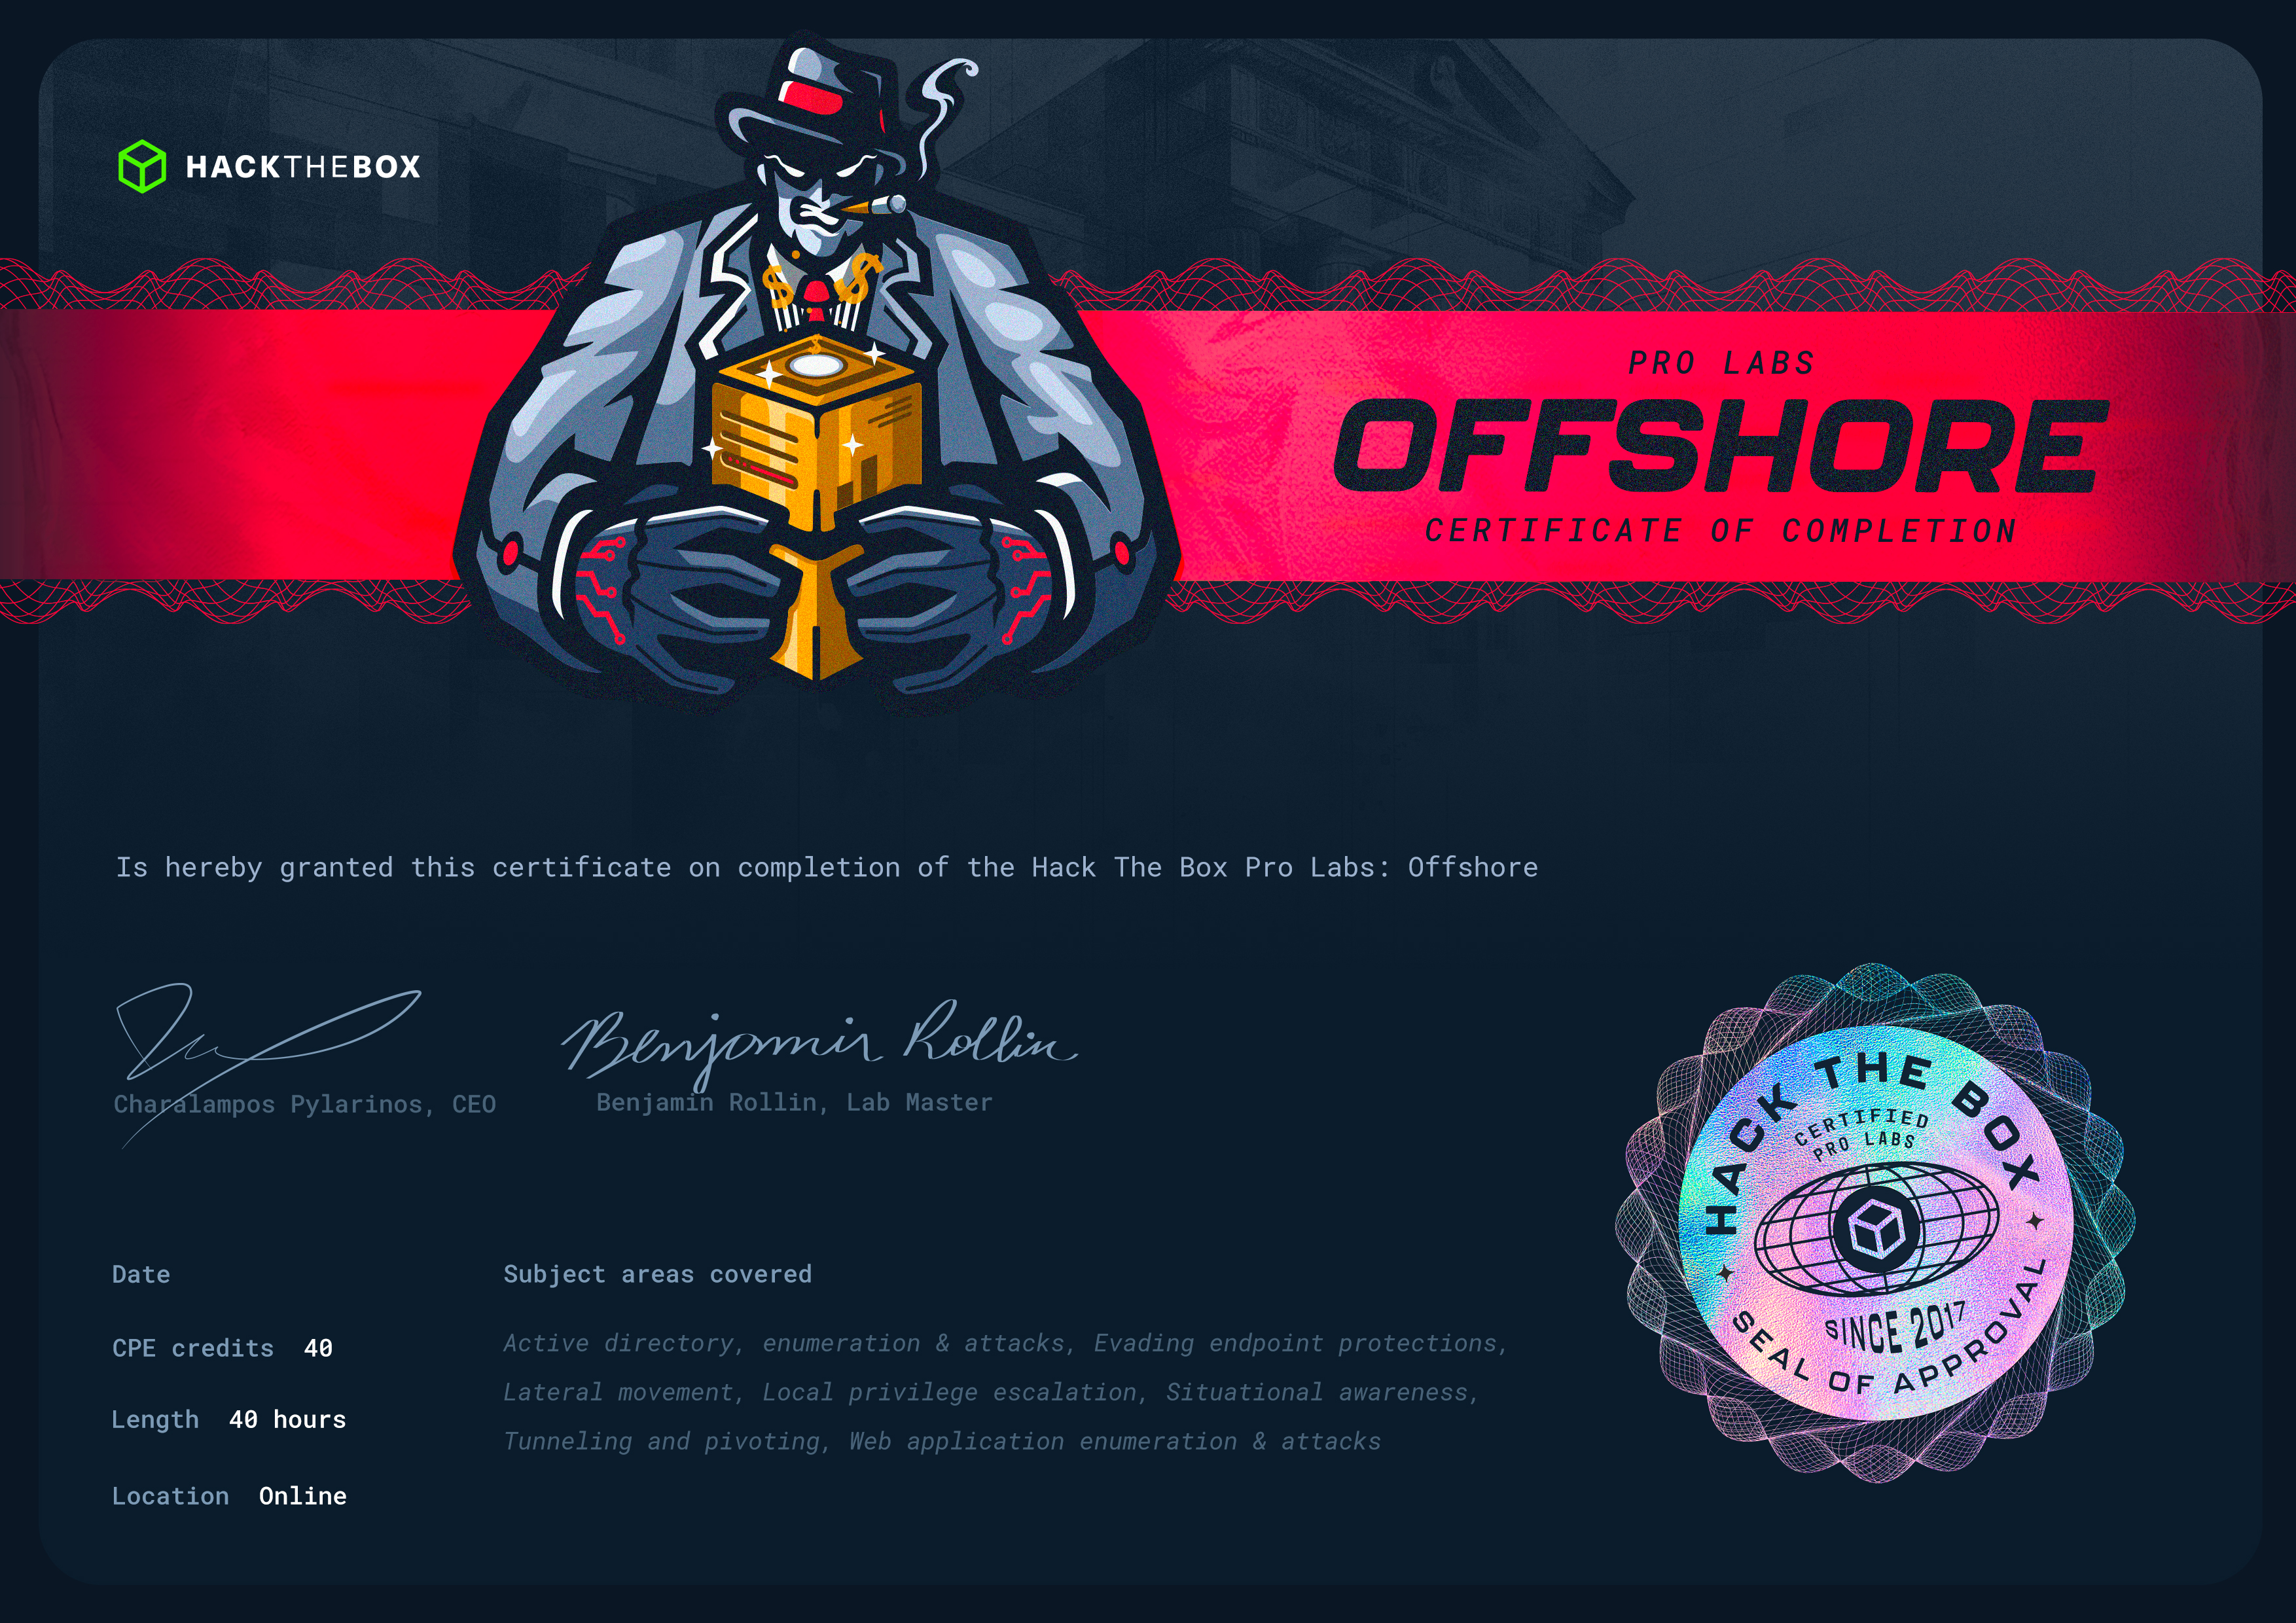 Offshore Certificate